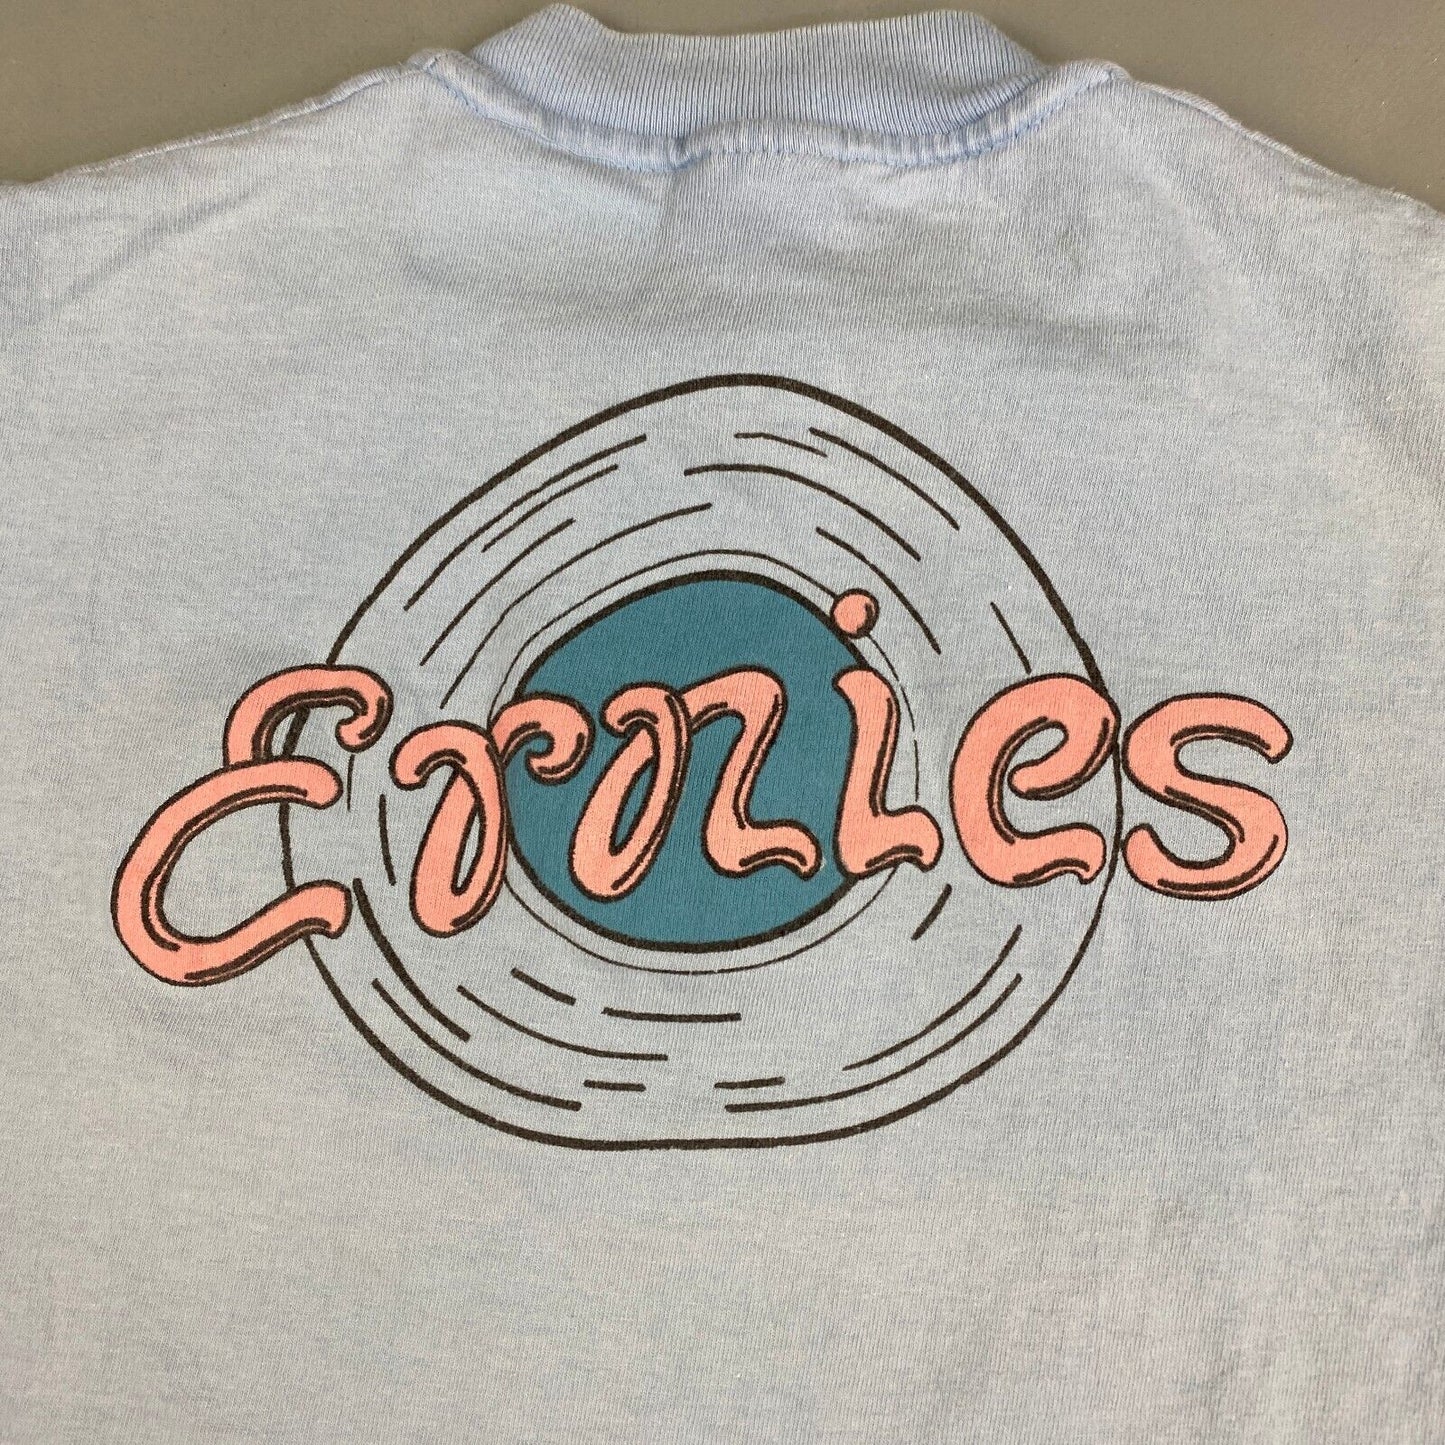 VINTAGE 80s Ernies Records Faded Blue T-Shirt sz Medium Men Adult